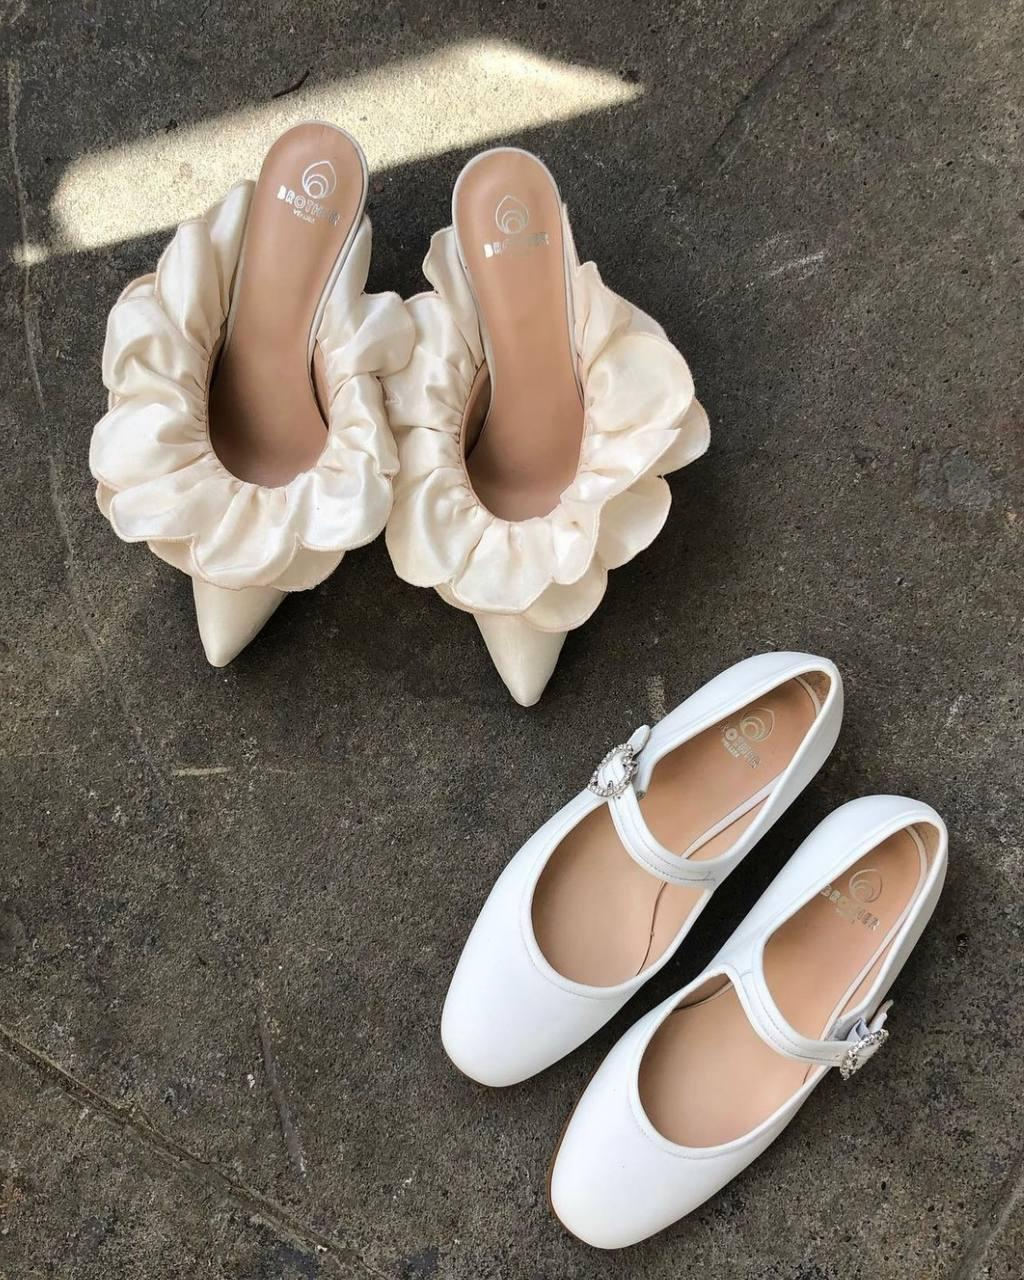 22 Trendy Block Heel Wedding Shoes | Chunky, Pearls, Bows